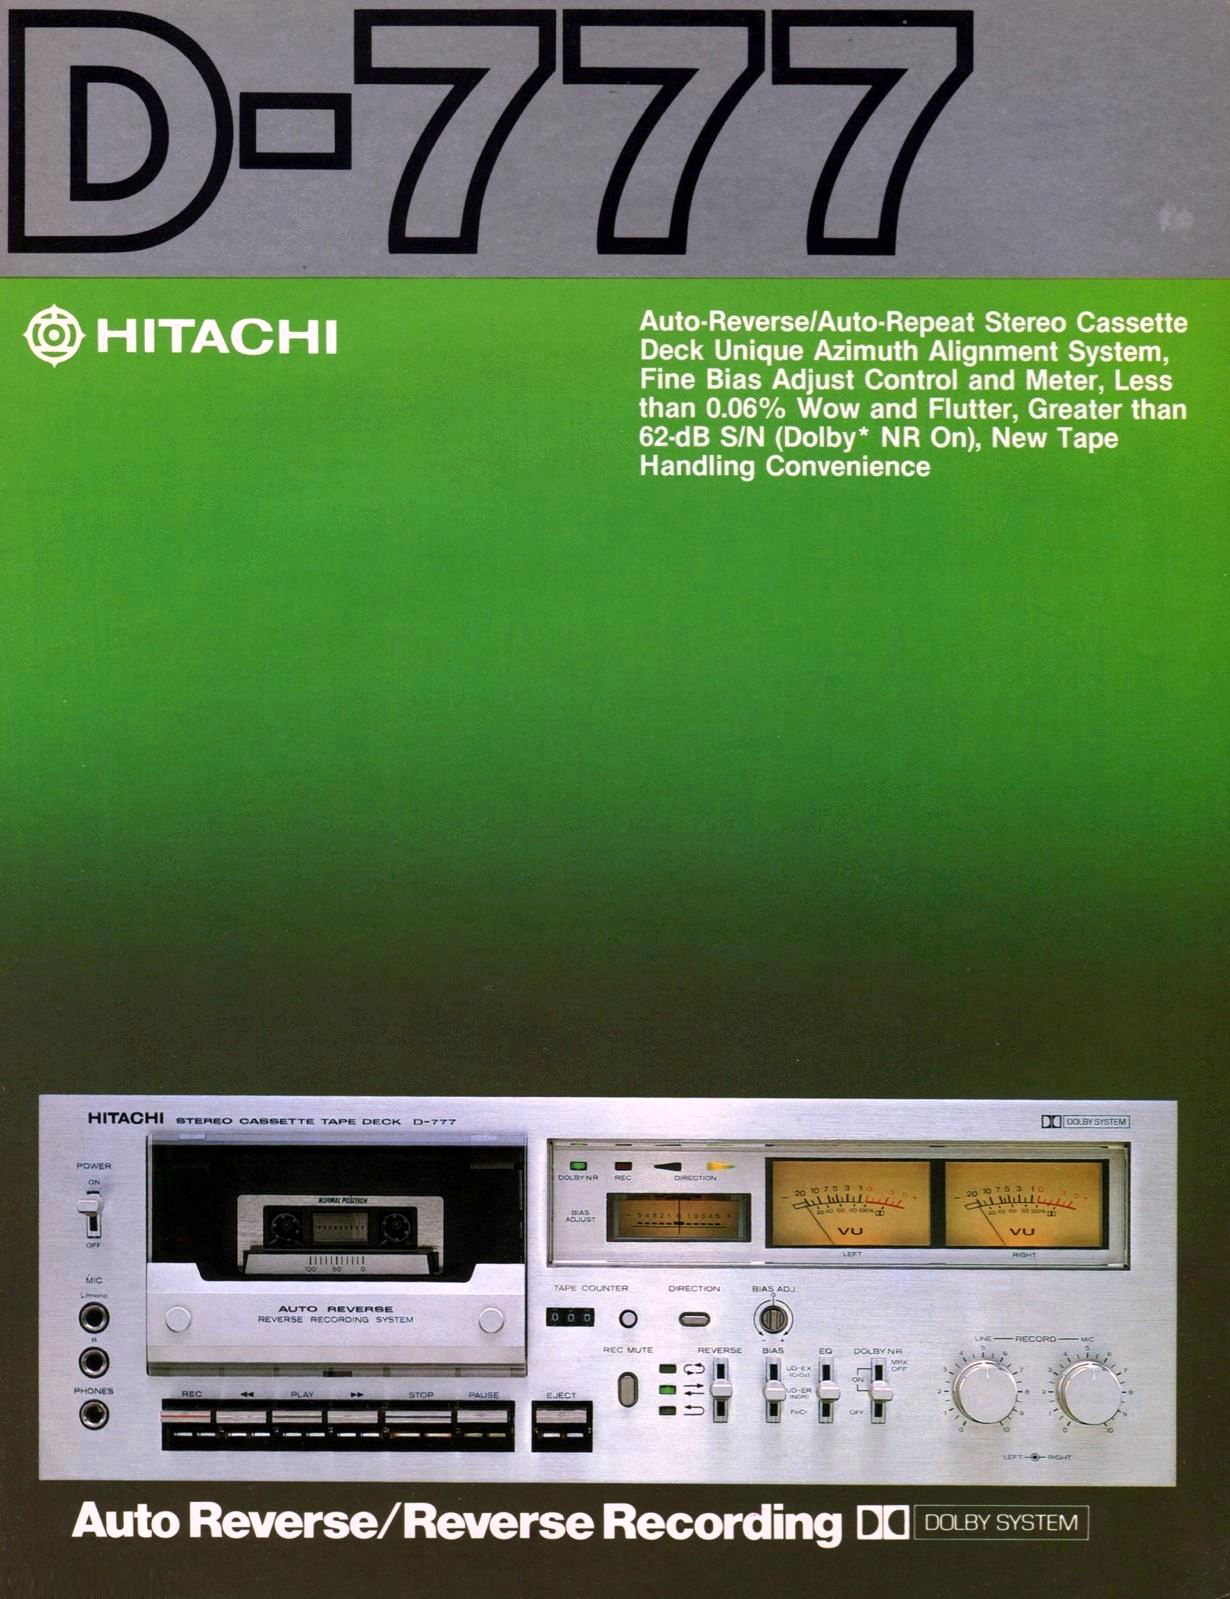 Hitachi D-777-Prospekt-2.jpg